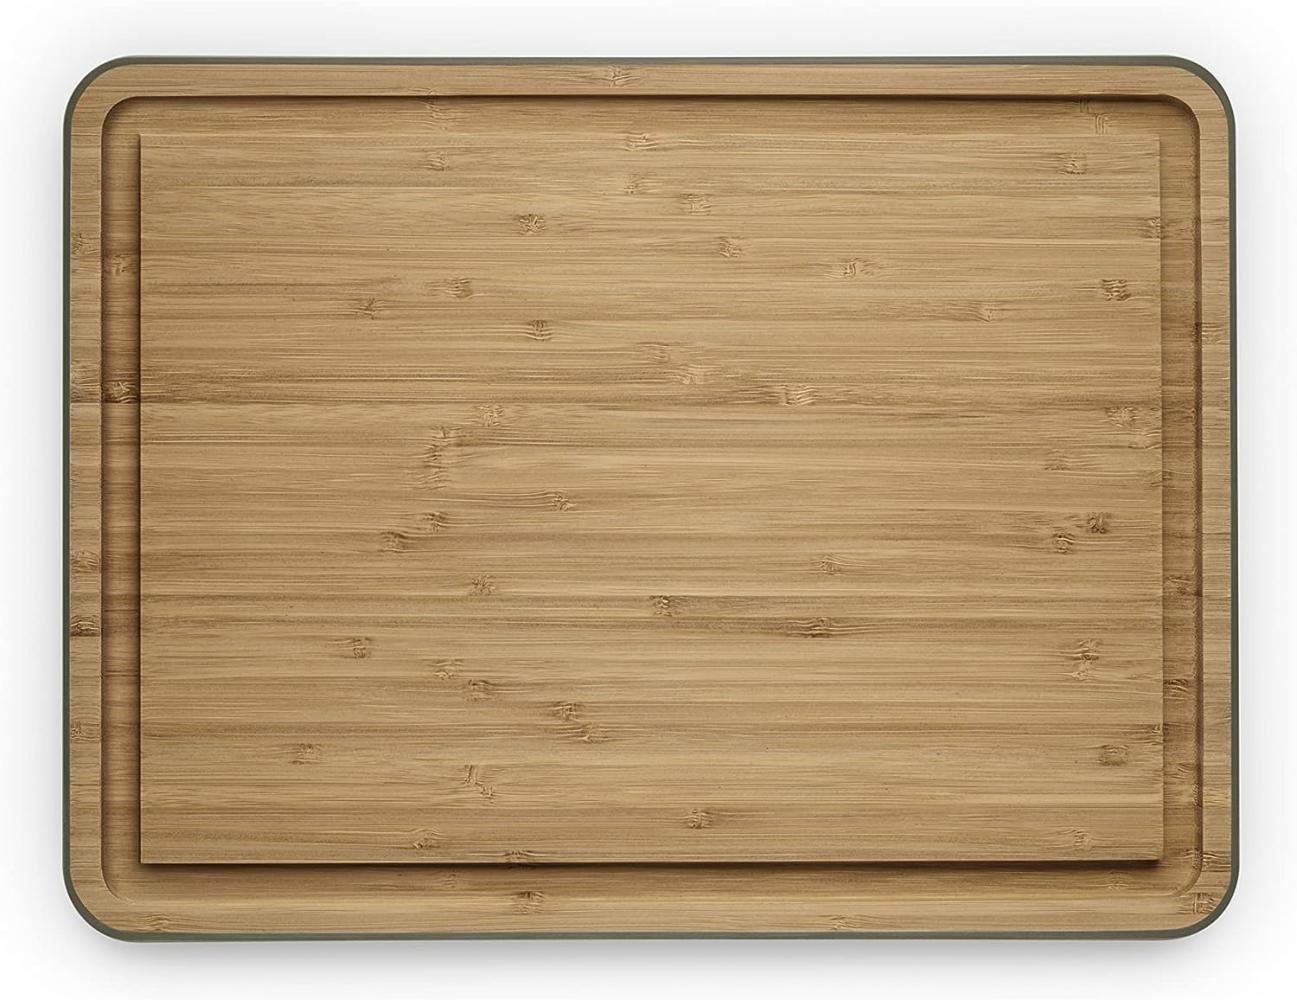 Eva Solo Green tool Schneidebrett, mit Saftrille, Schneidbrett, Holzbrett, Tranchierbrett, Küchenbrett, Bambusholz, 39 x 28 cm, 520350 Bild 1